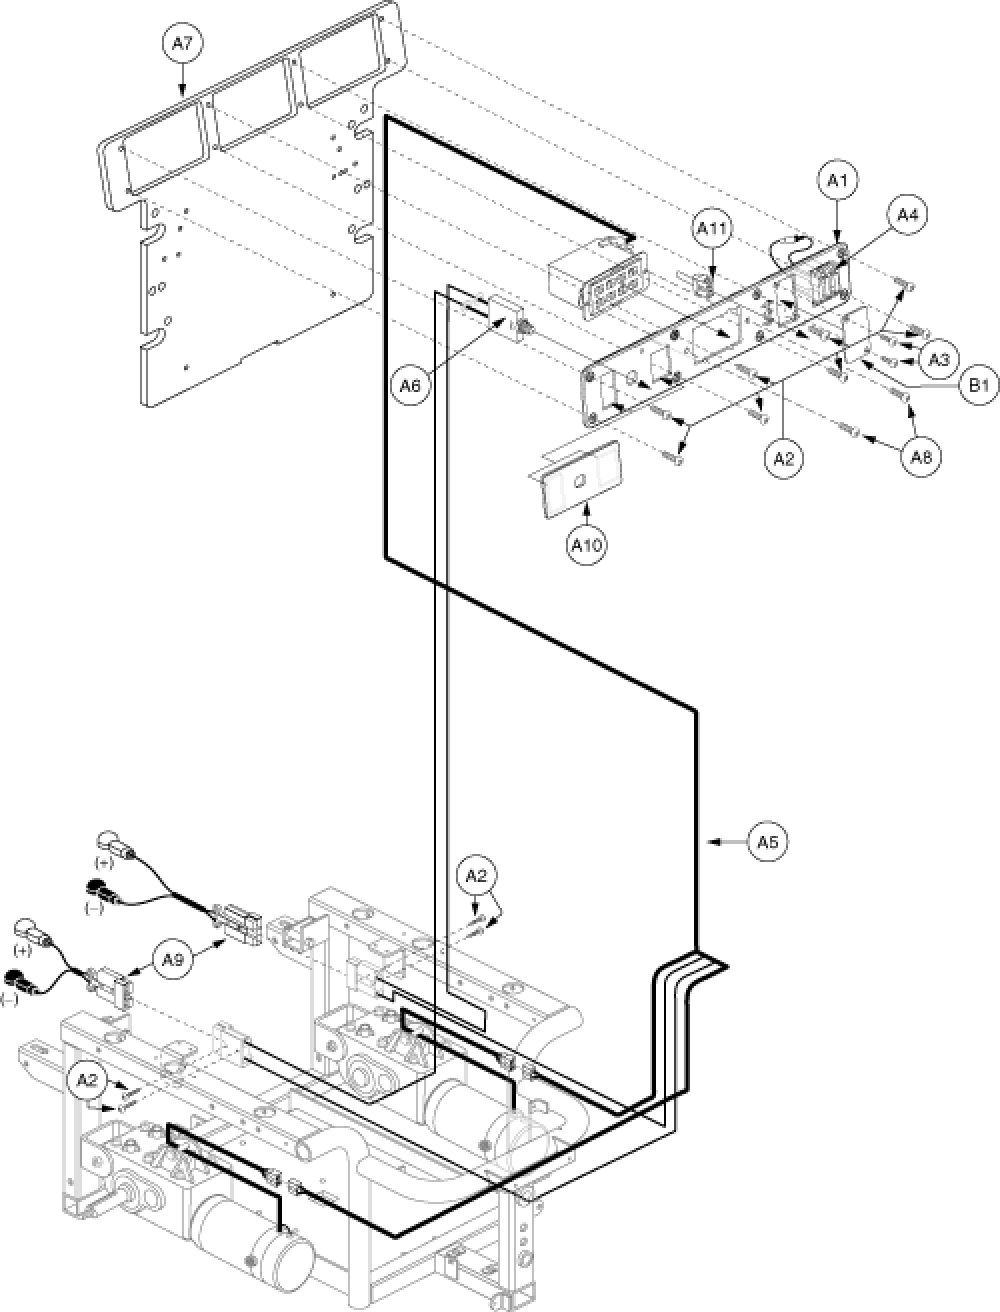 Utility Tray Assembly - Vsi, Off-board parts diagram